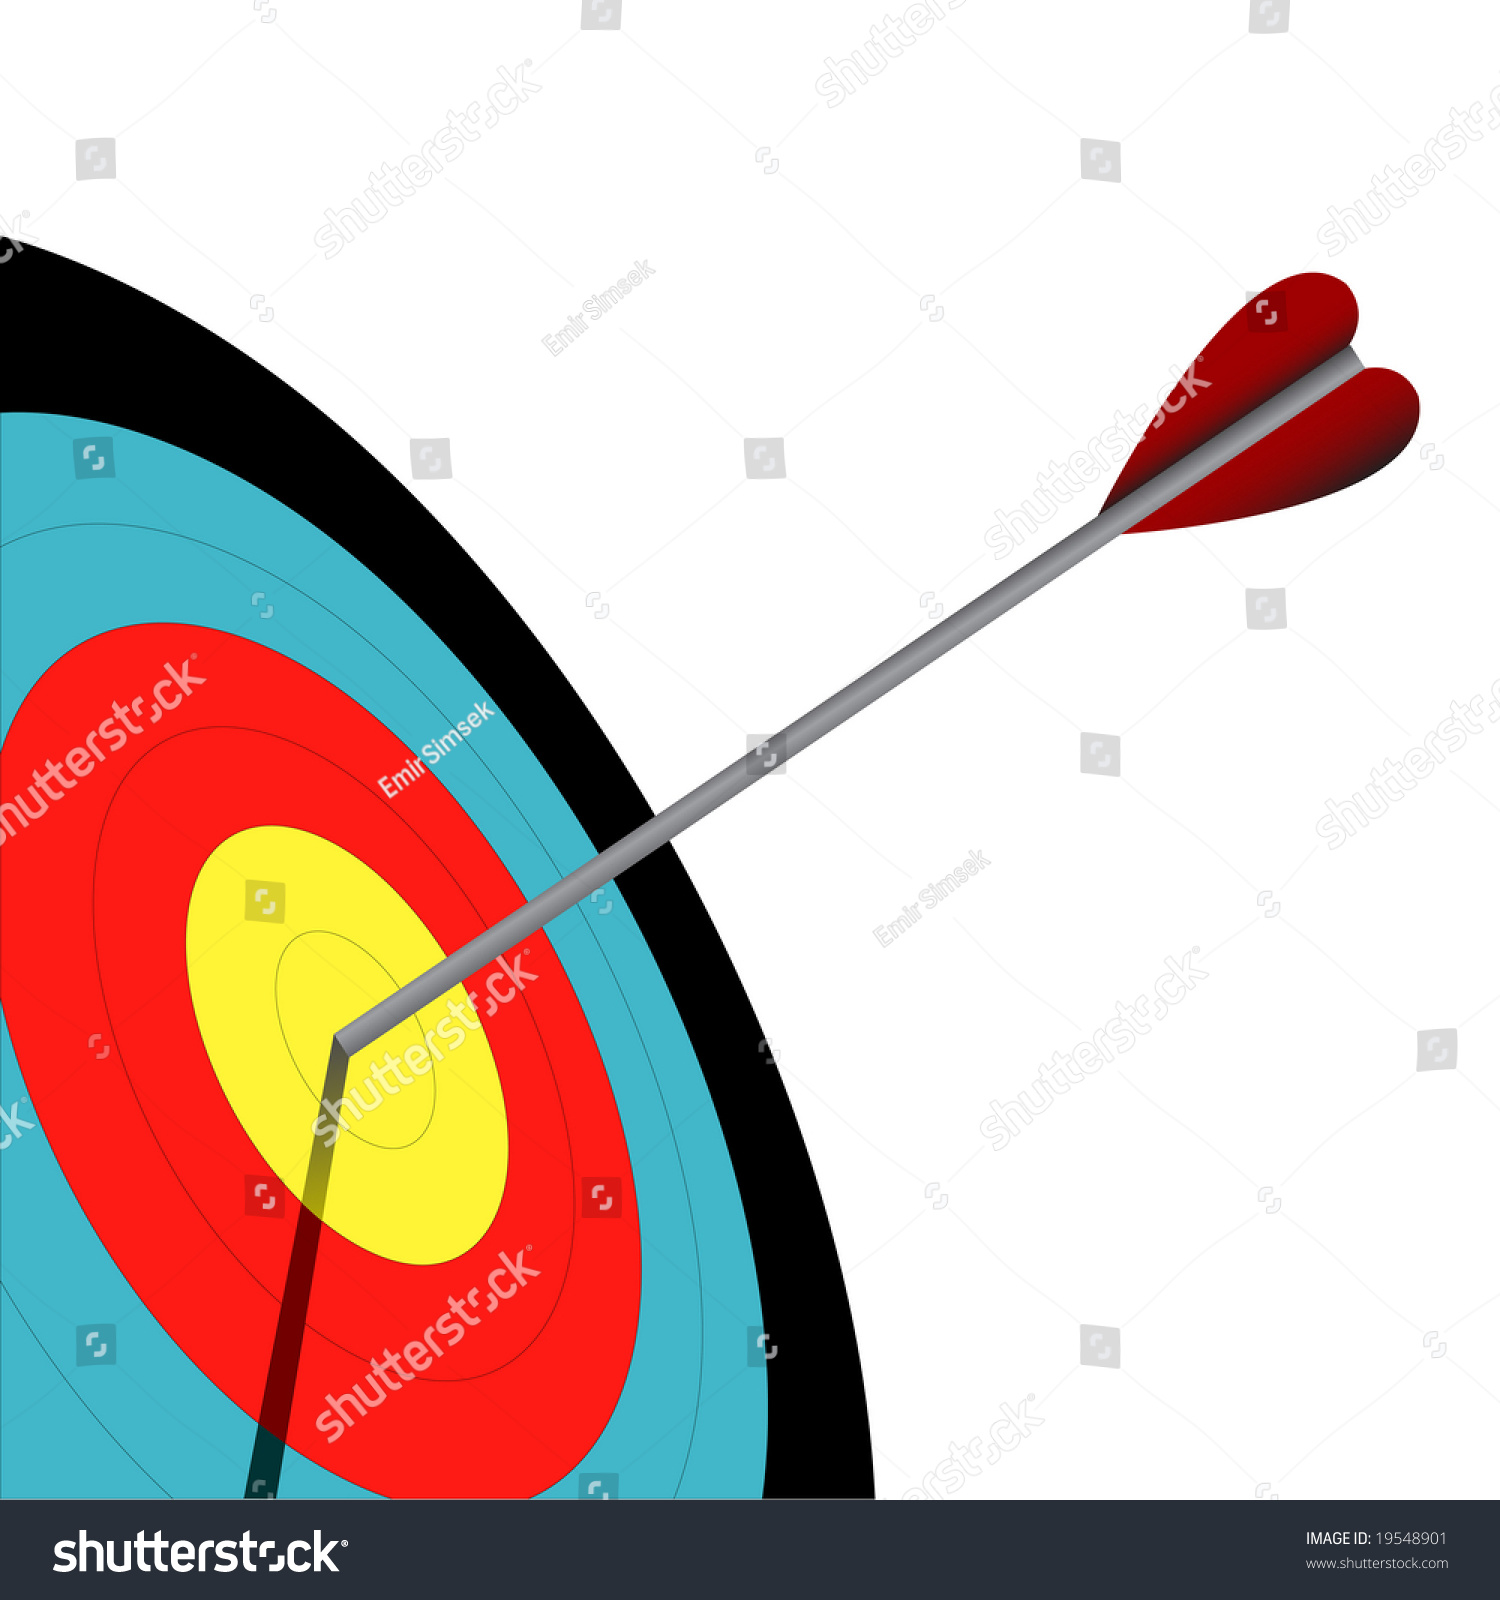 Archery Stock Vector Illustration 19548901 : Shutterstock